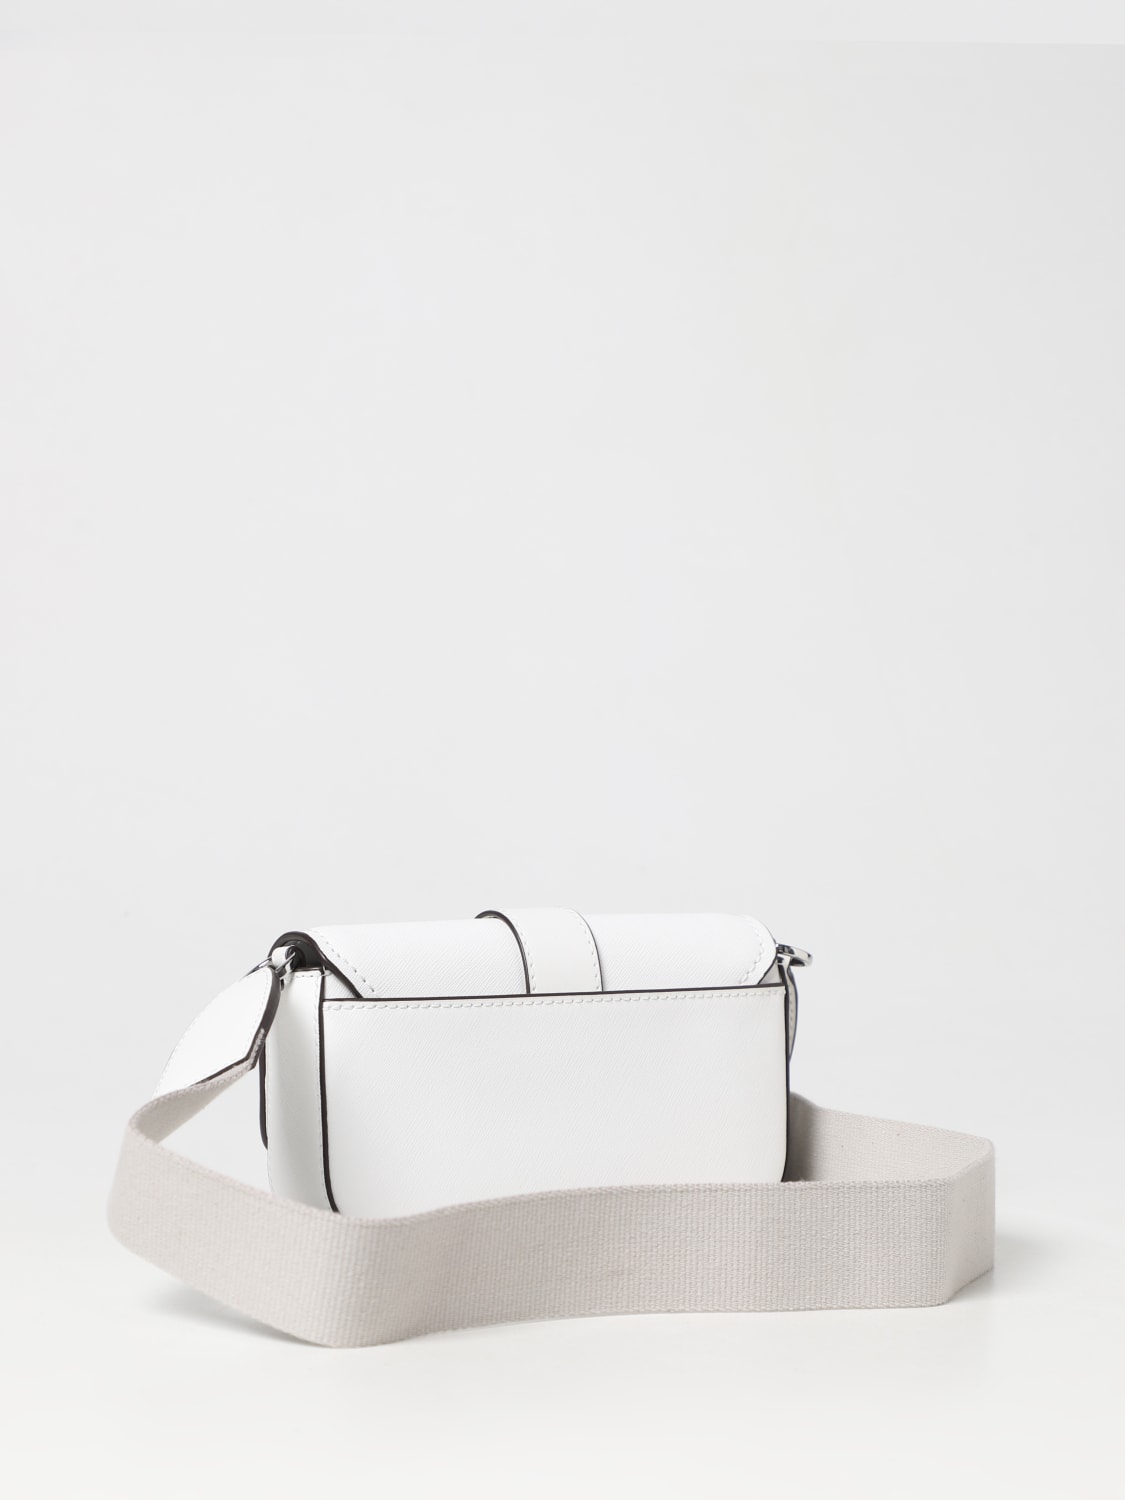 Michael Kors White Saffiano Leather Crossbody Bag